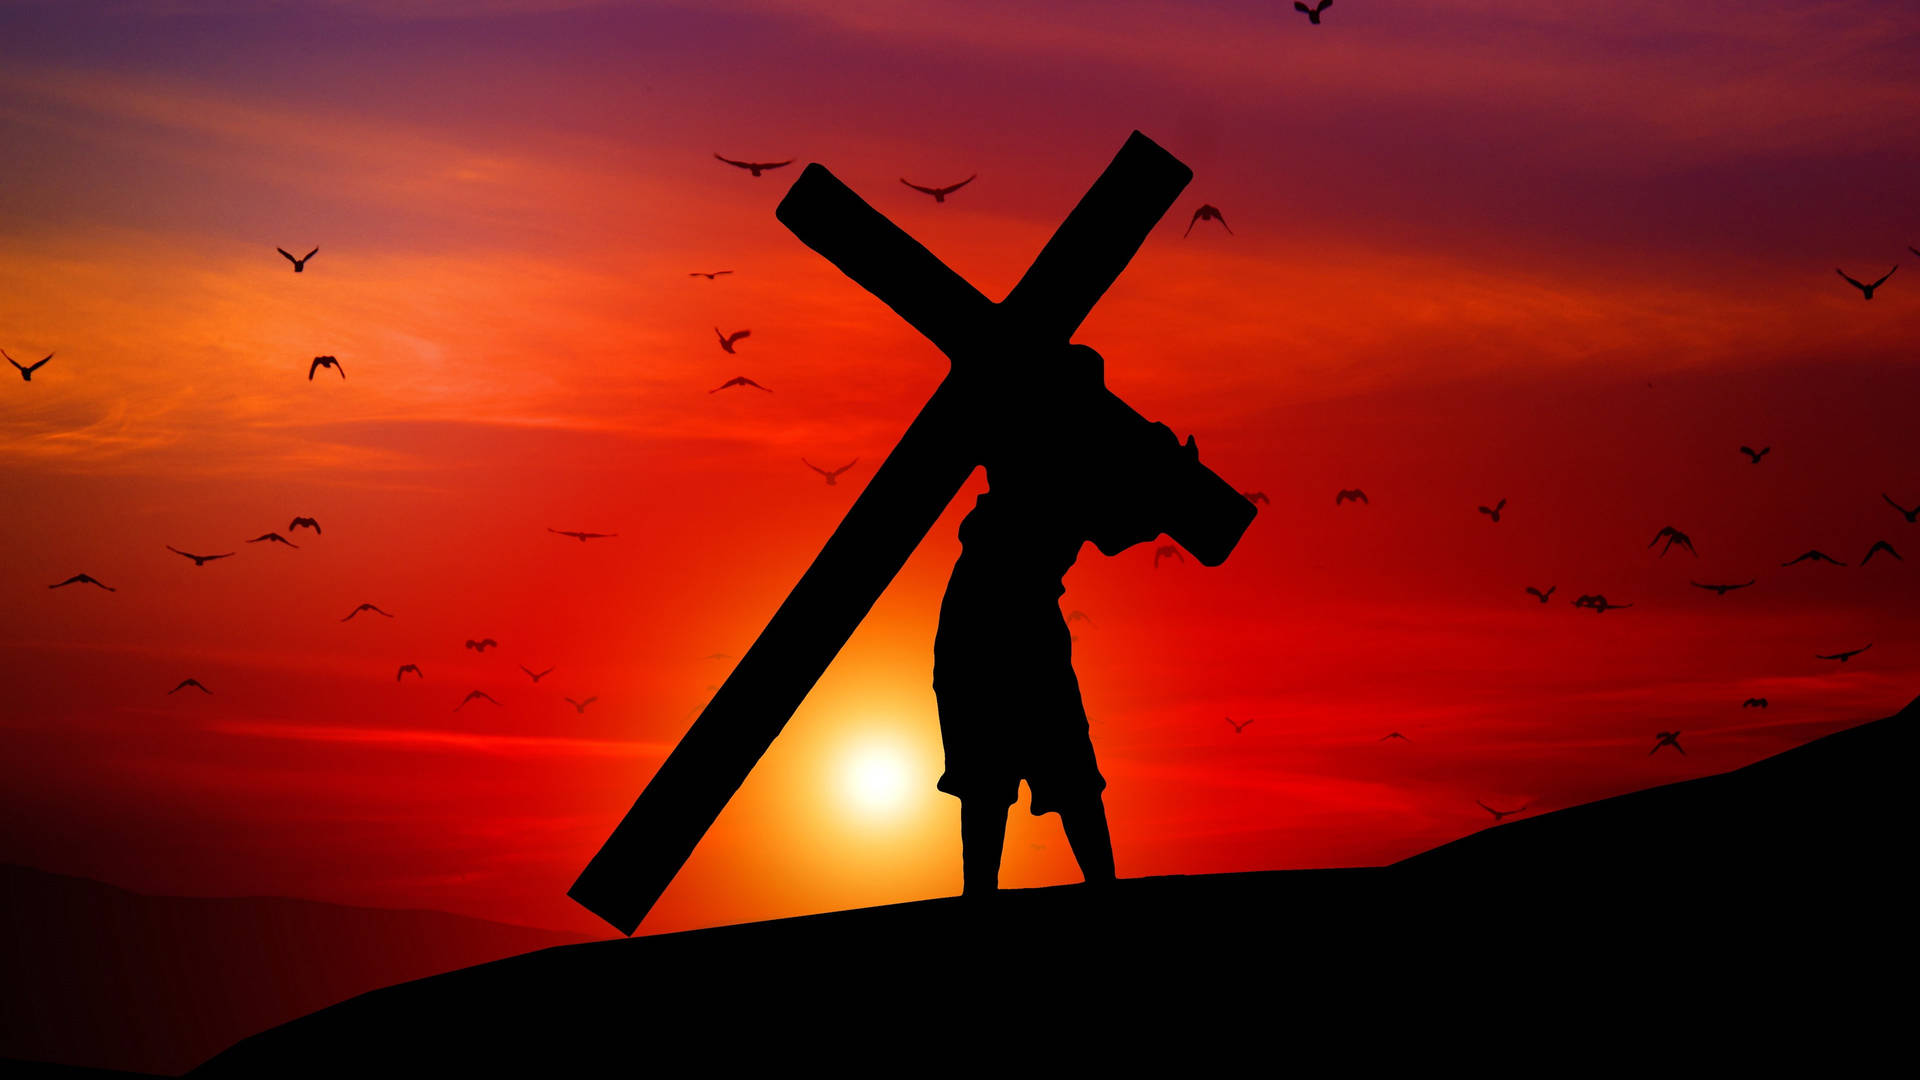 jesus christ carrying the cross wallpaper